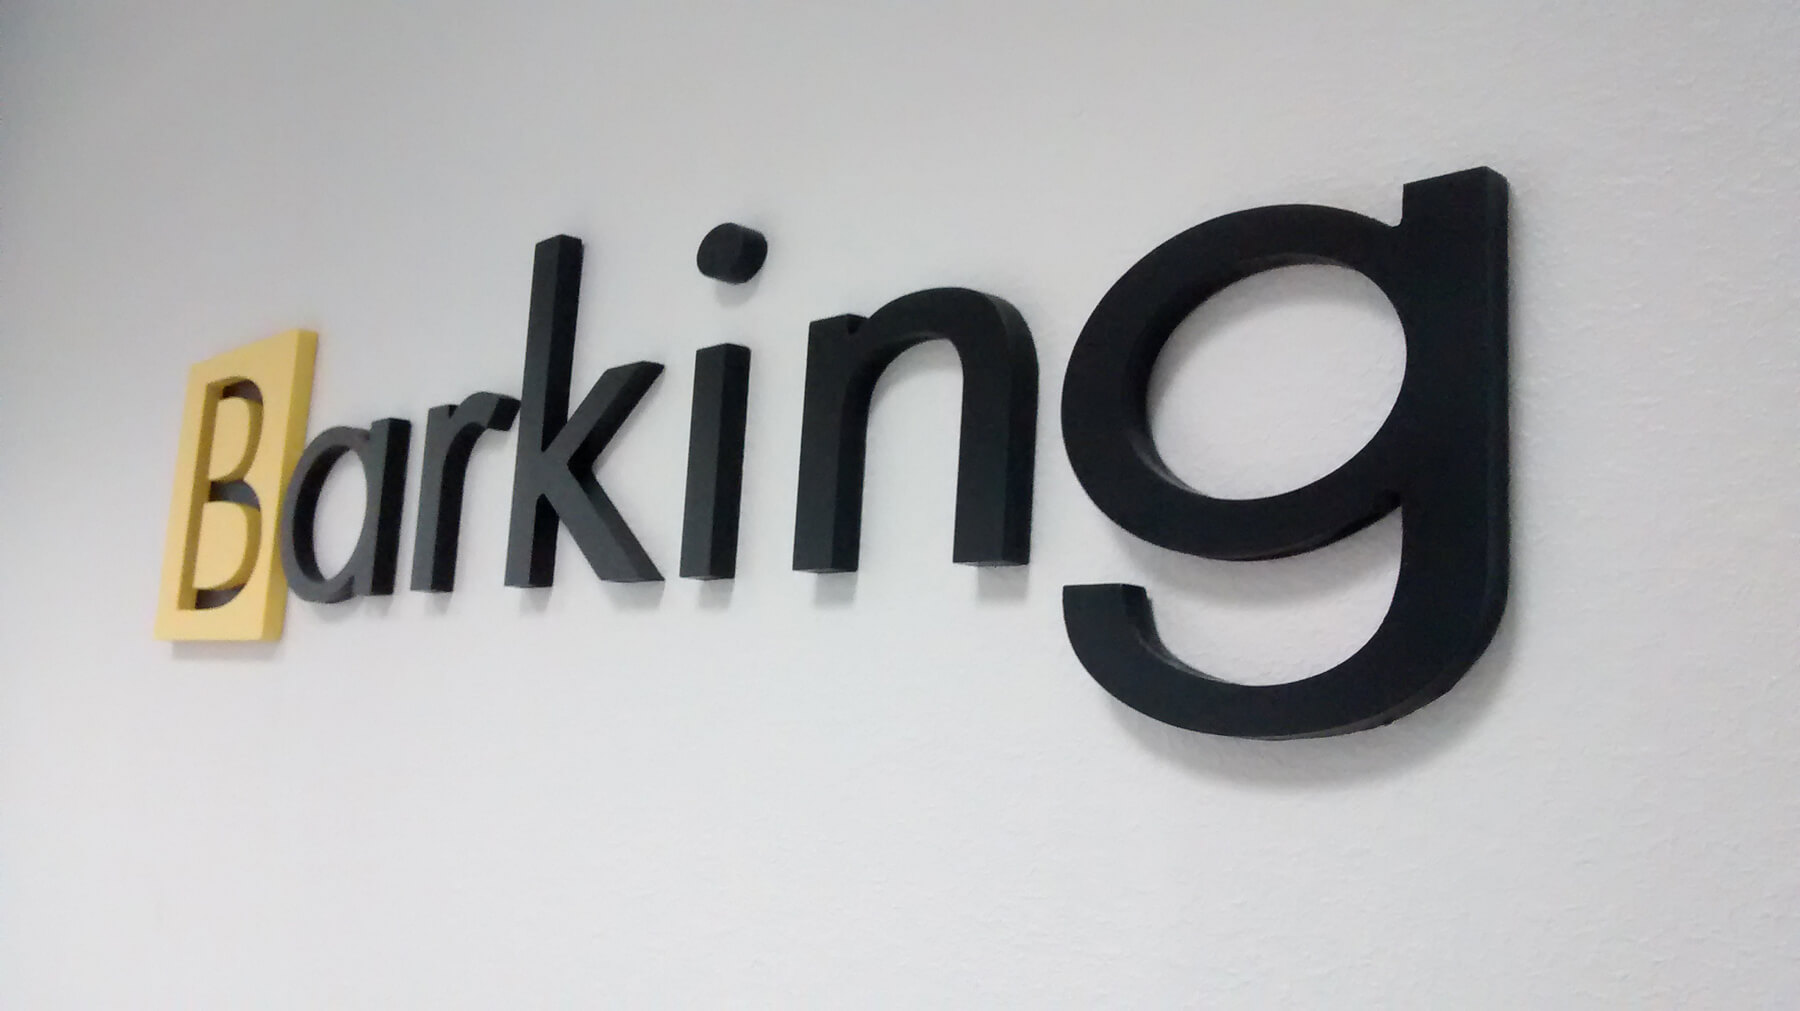 Barking firma logo seinale